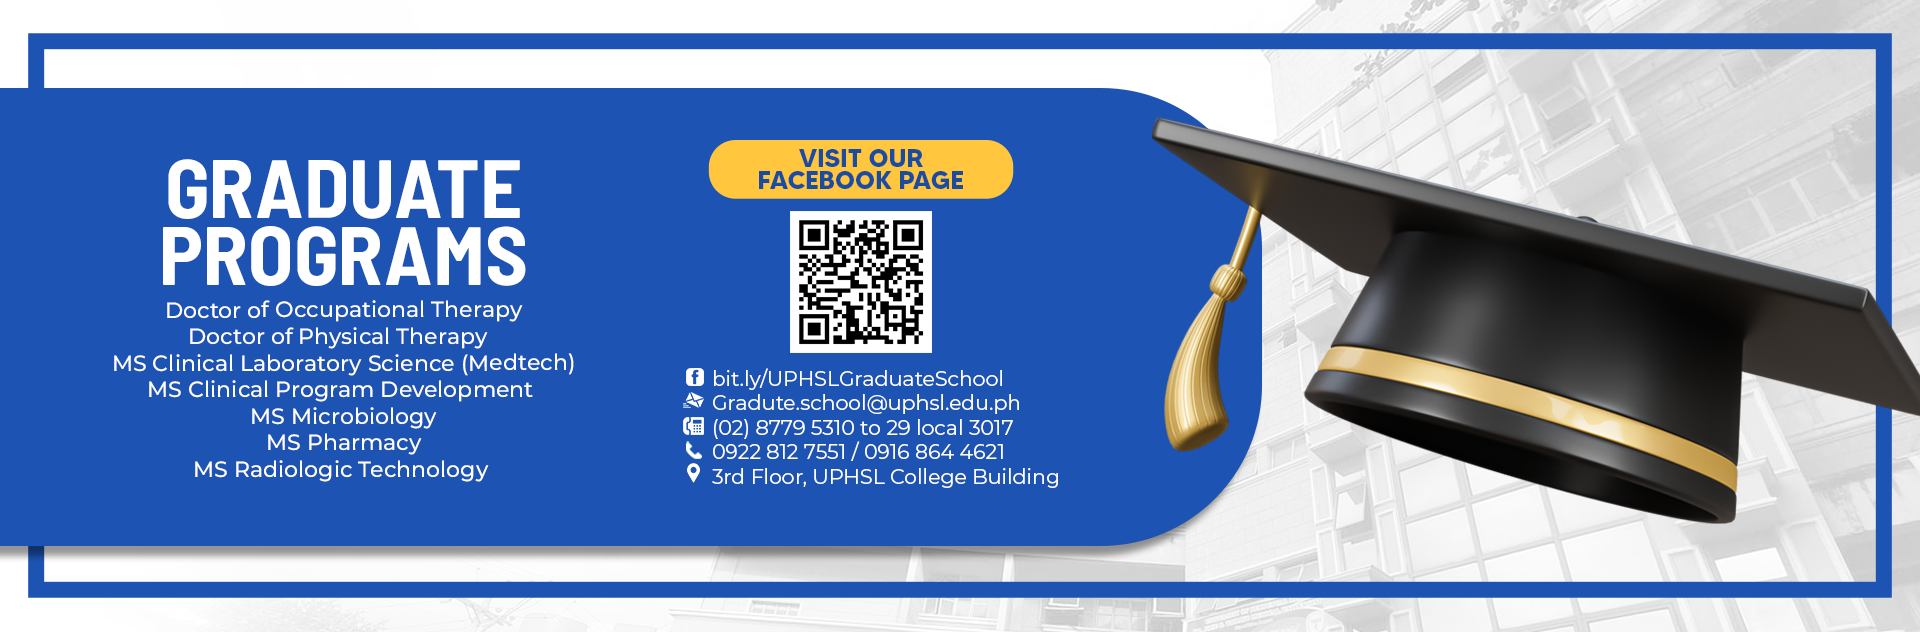 Graduate-programs-Offered--Website.png